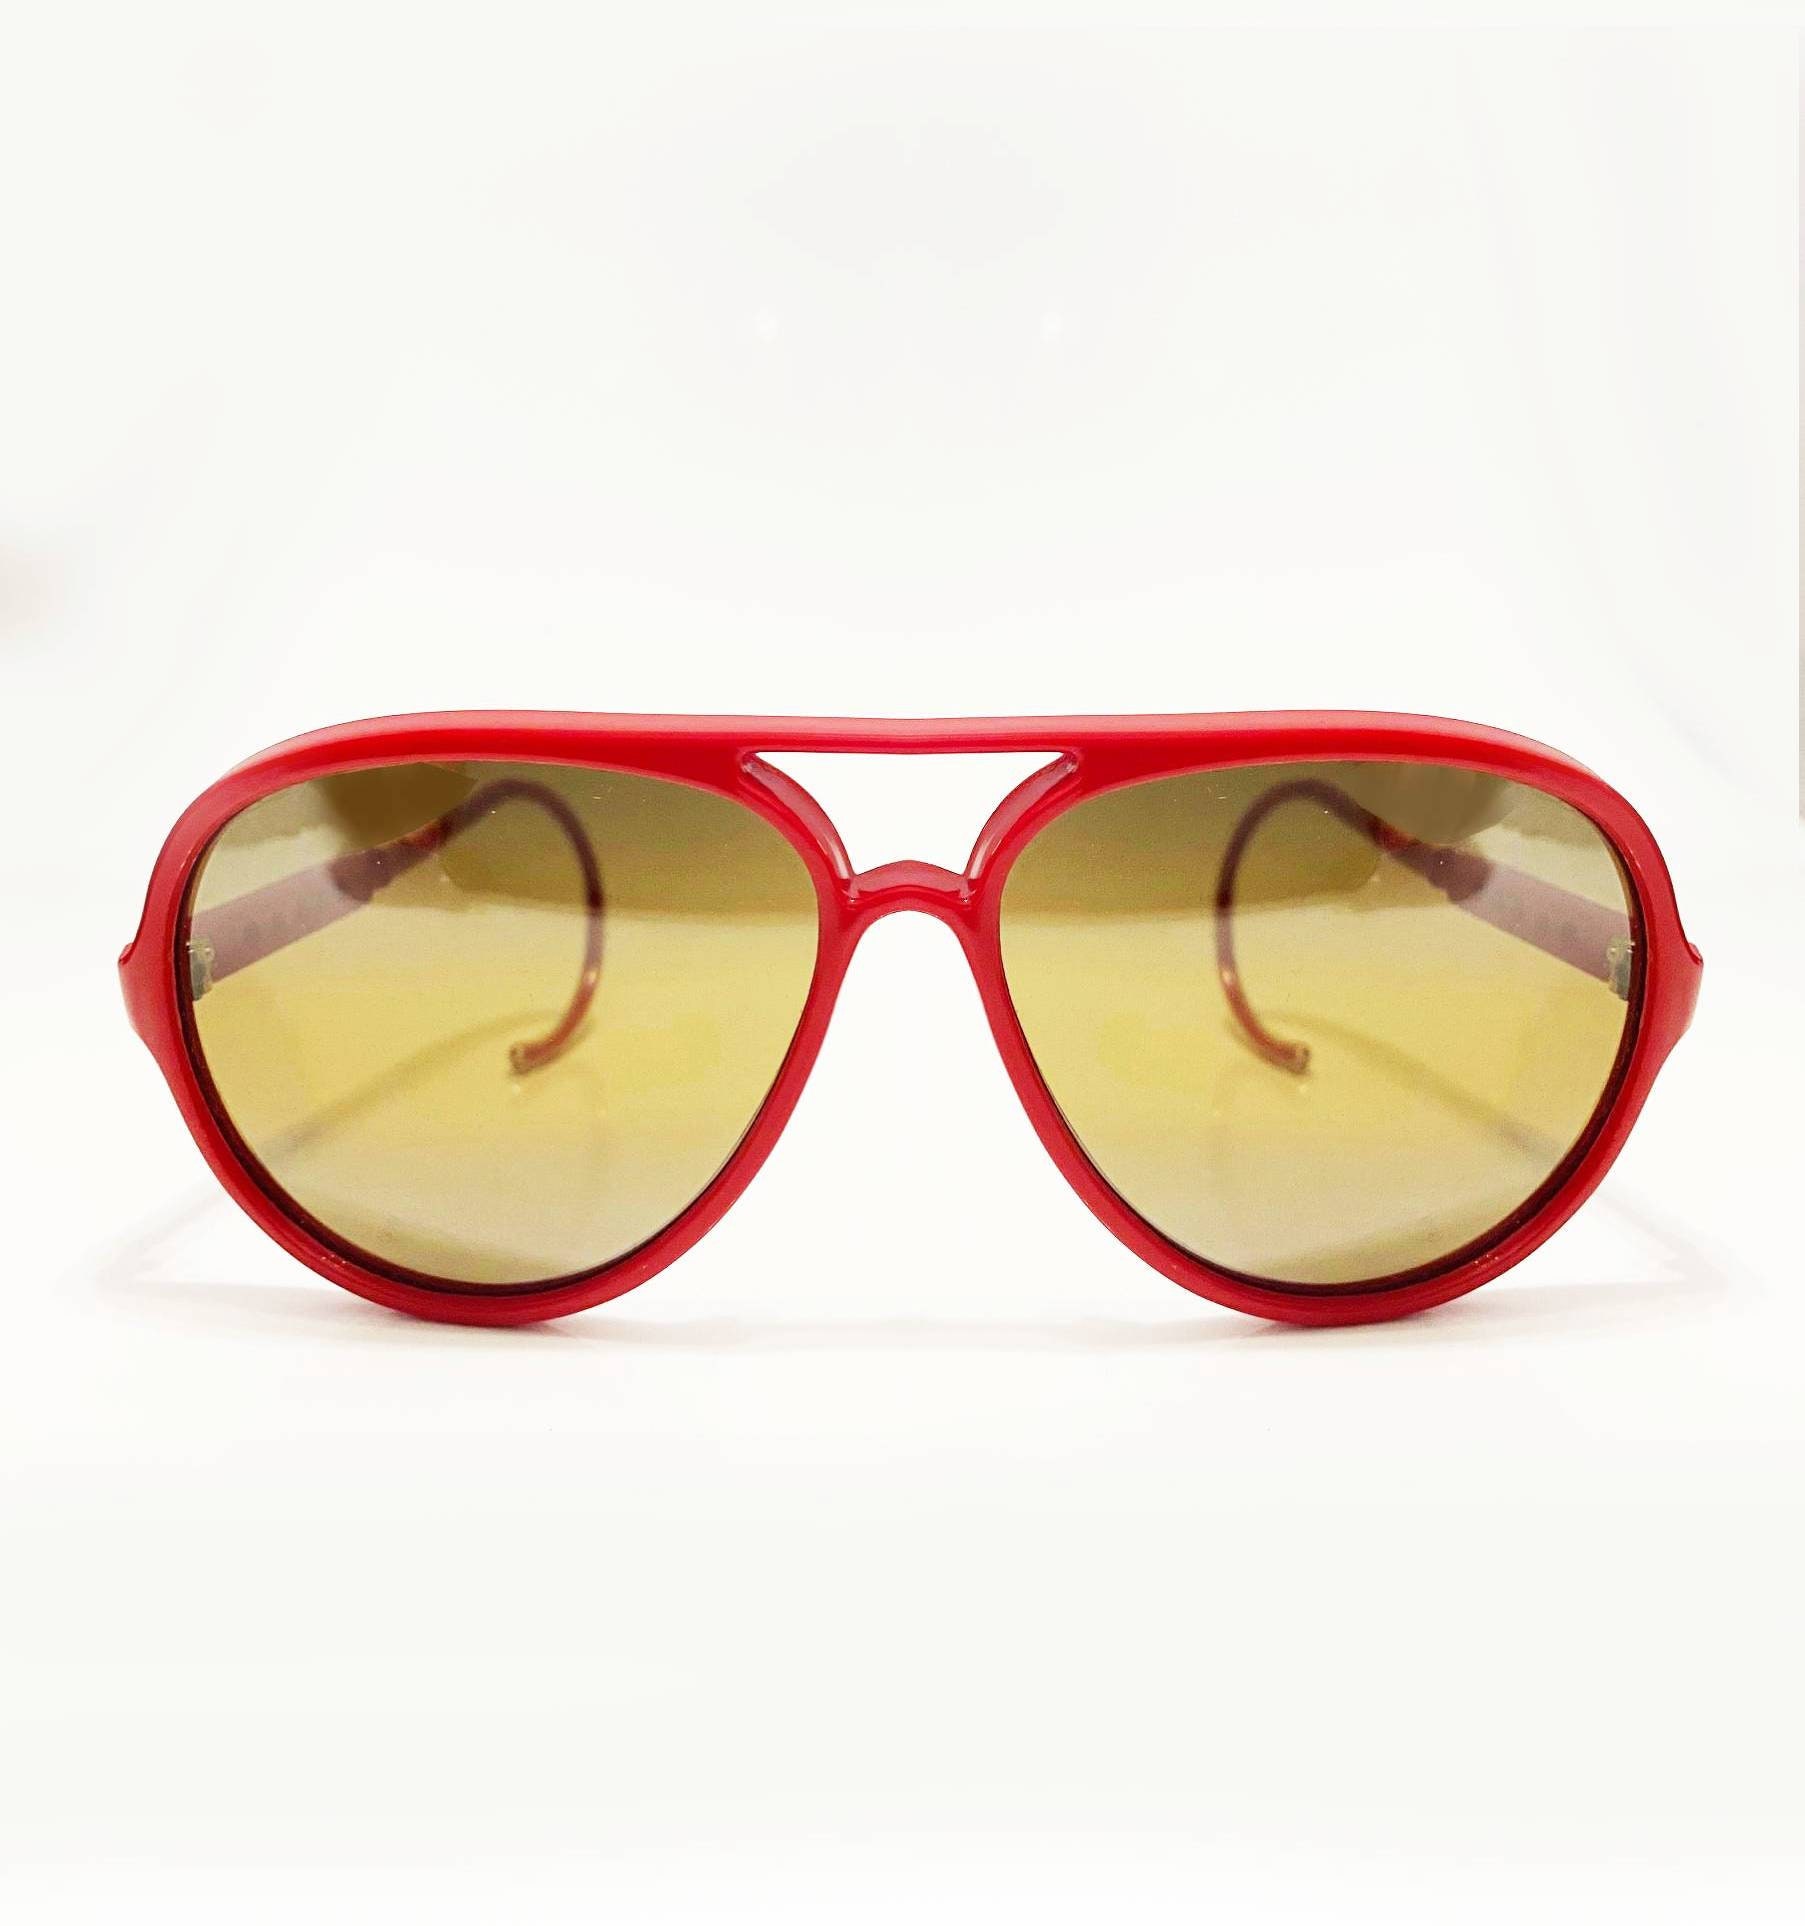 Hound læber elektrode 1980s Rossignol Ski Mirrored Red Sunglasses - Etsy